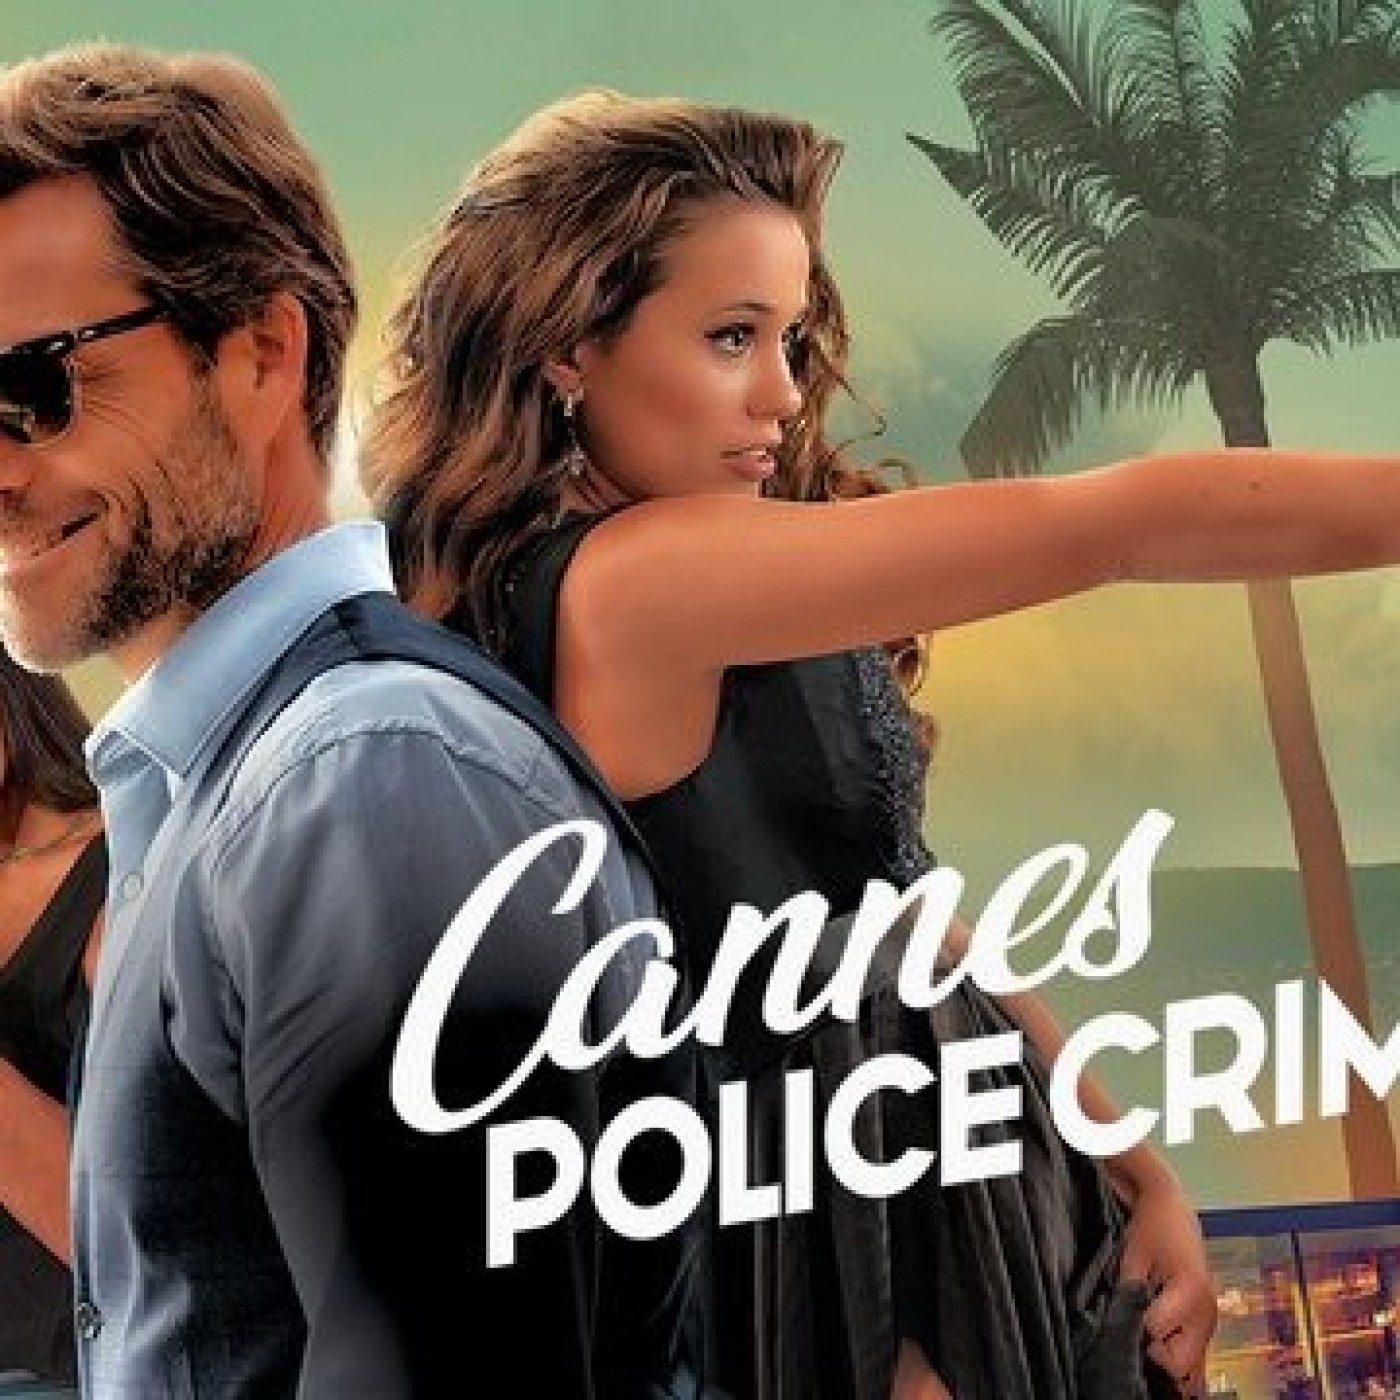 Cannes Police Criminelle diffusée ce lundi soir sur TF1